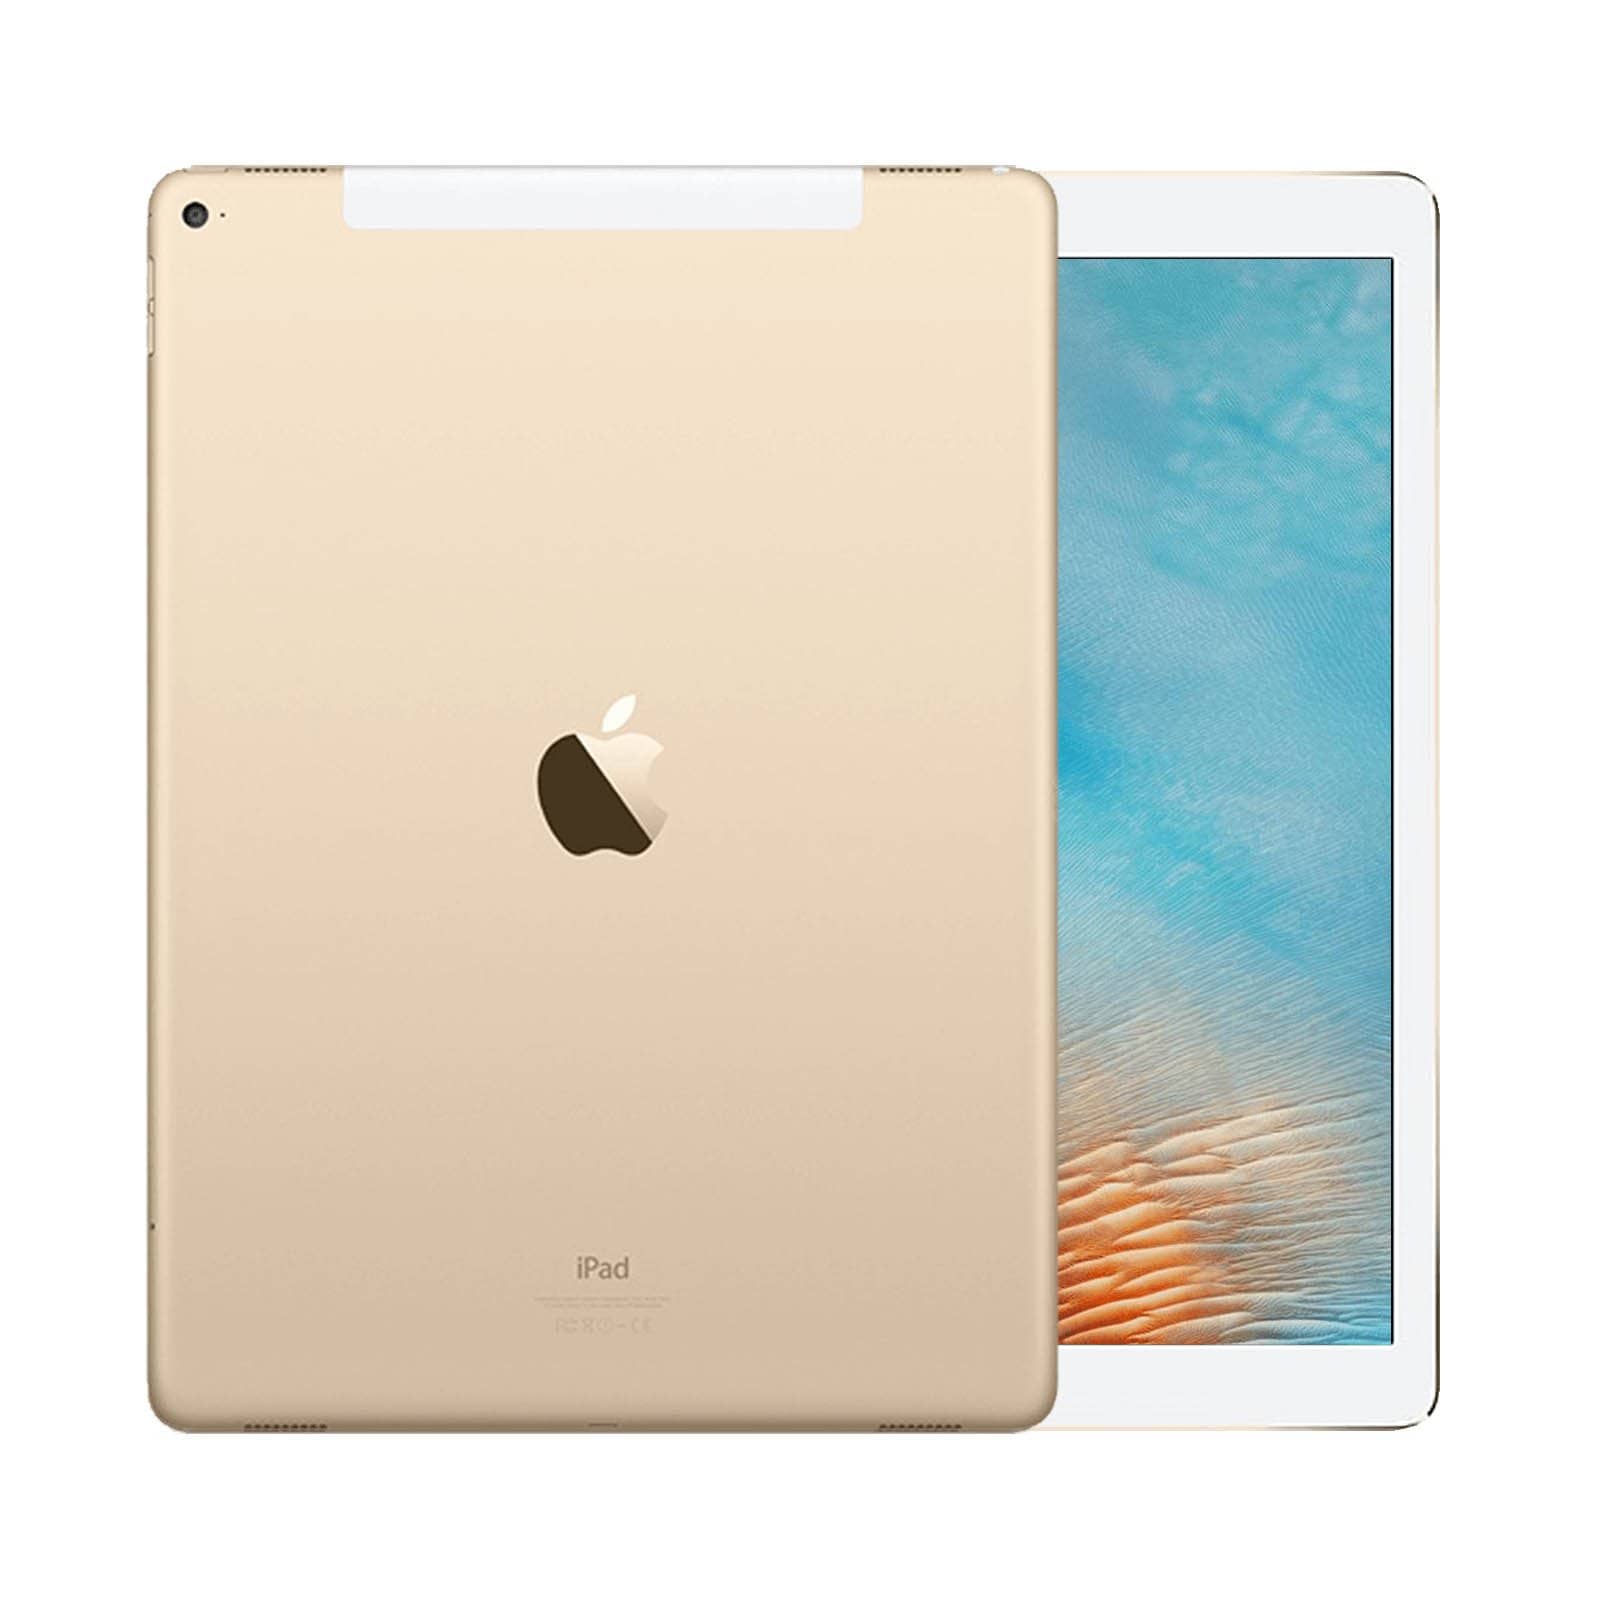 iPad Pro 12.9 Inch 2nd Gen 512GB Gold Good - WiFi 512GB Gold Good